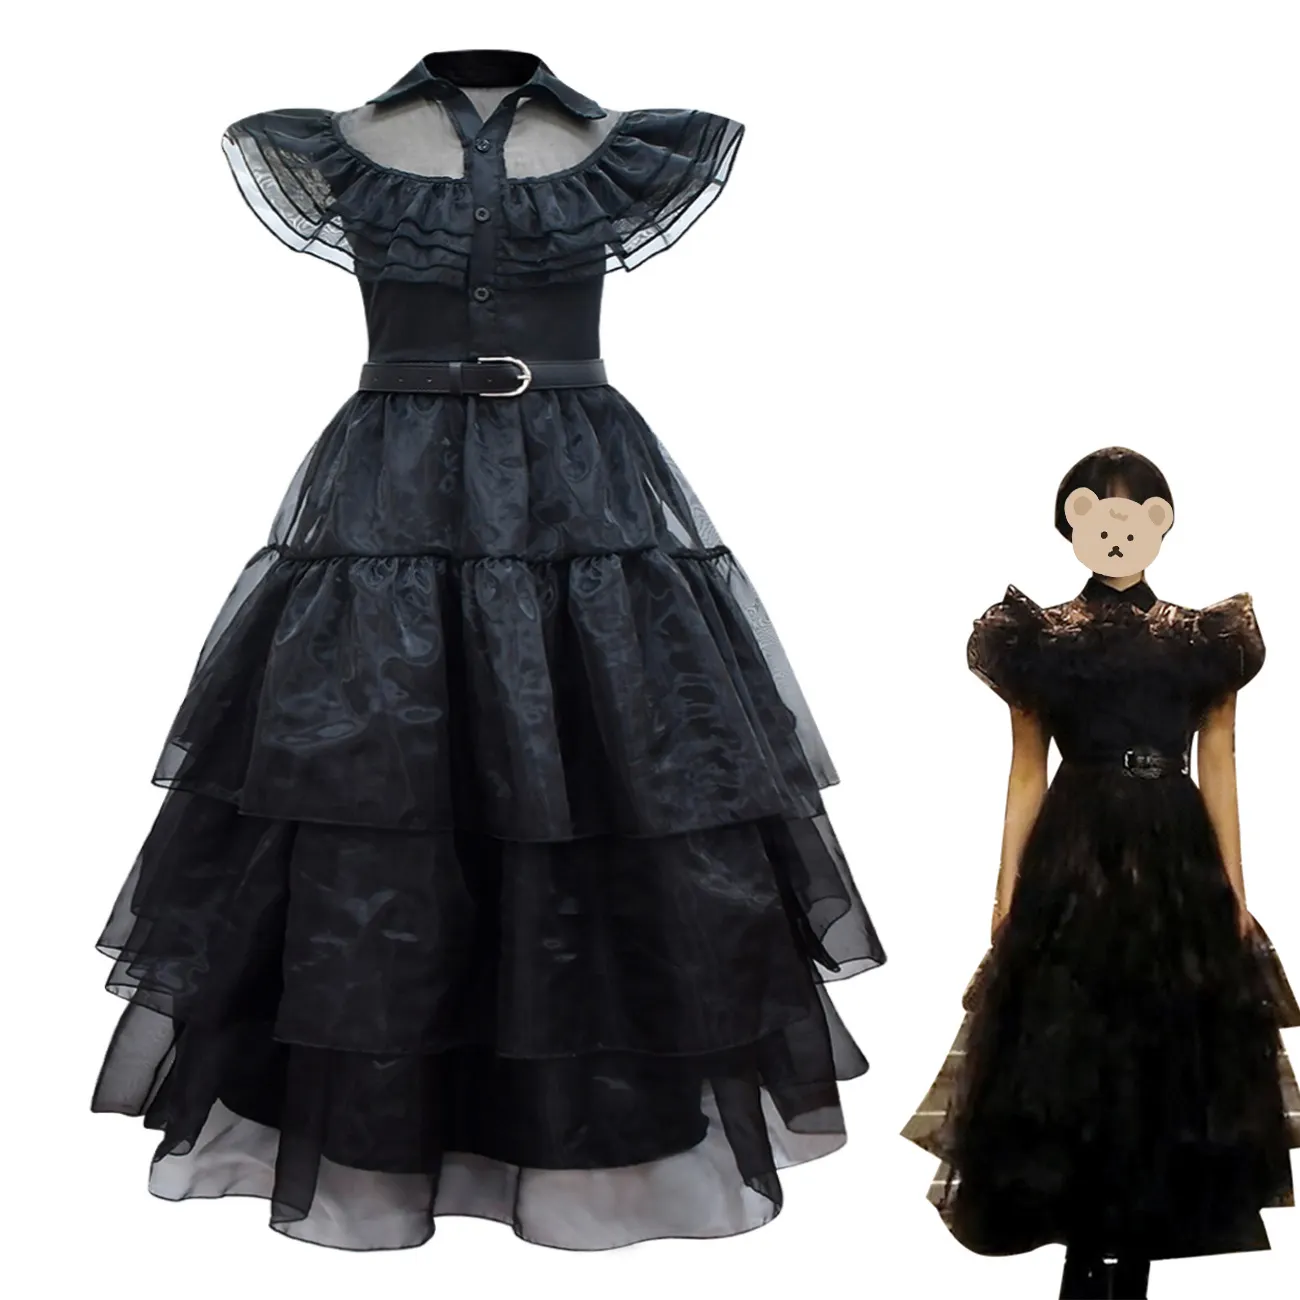 FSMKTZ Adams Family Wednesday Cos Black Adult Dress Halloween Party Skirt Wig Kids Cosplay Costume Suit